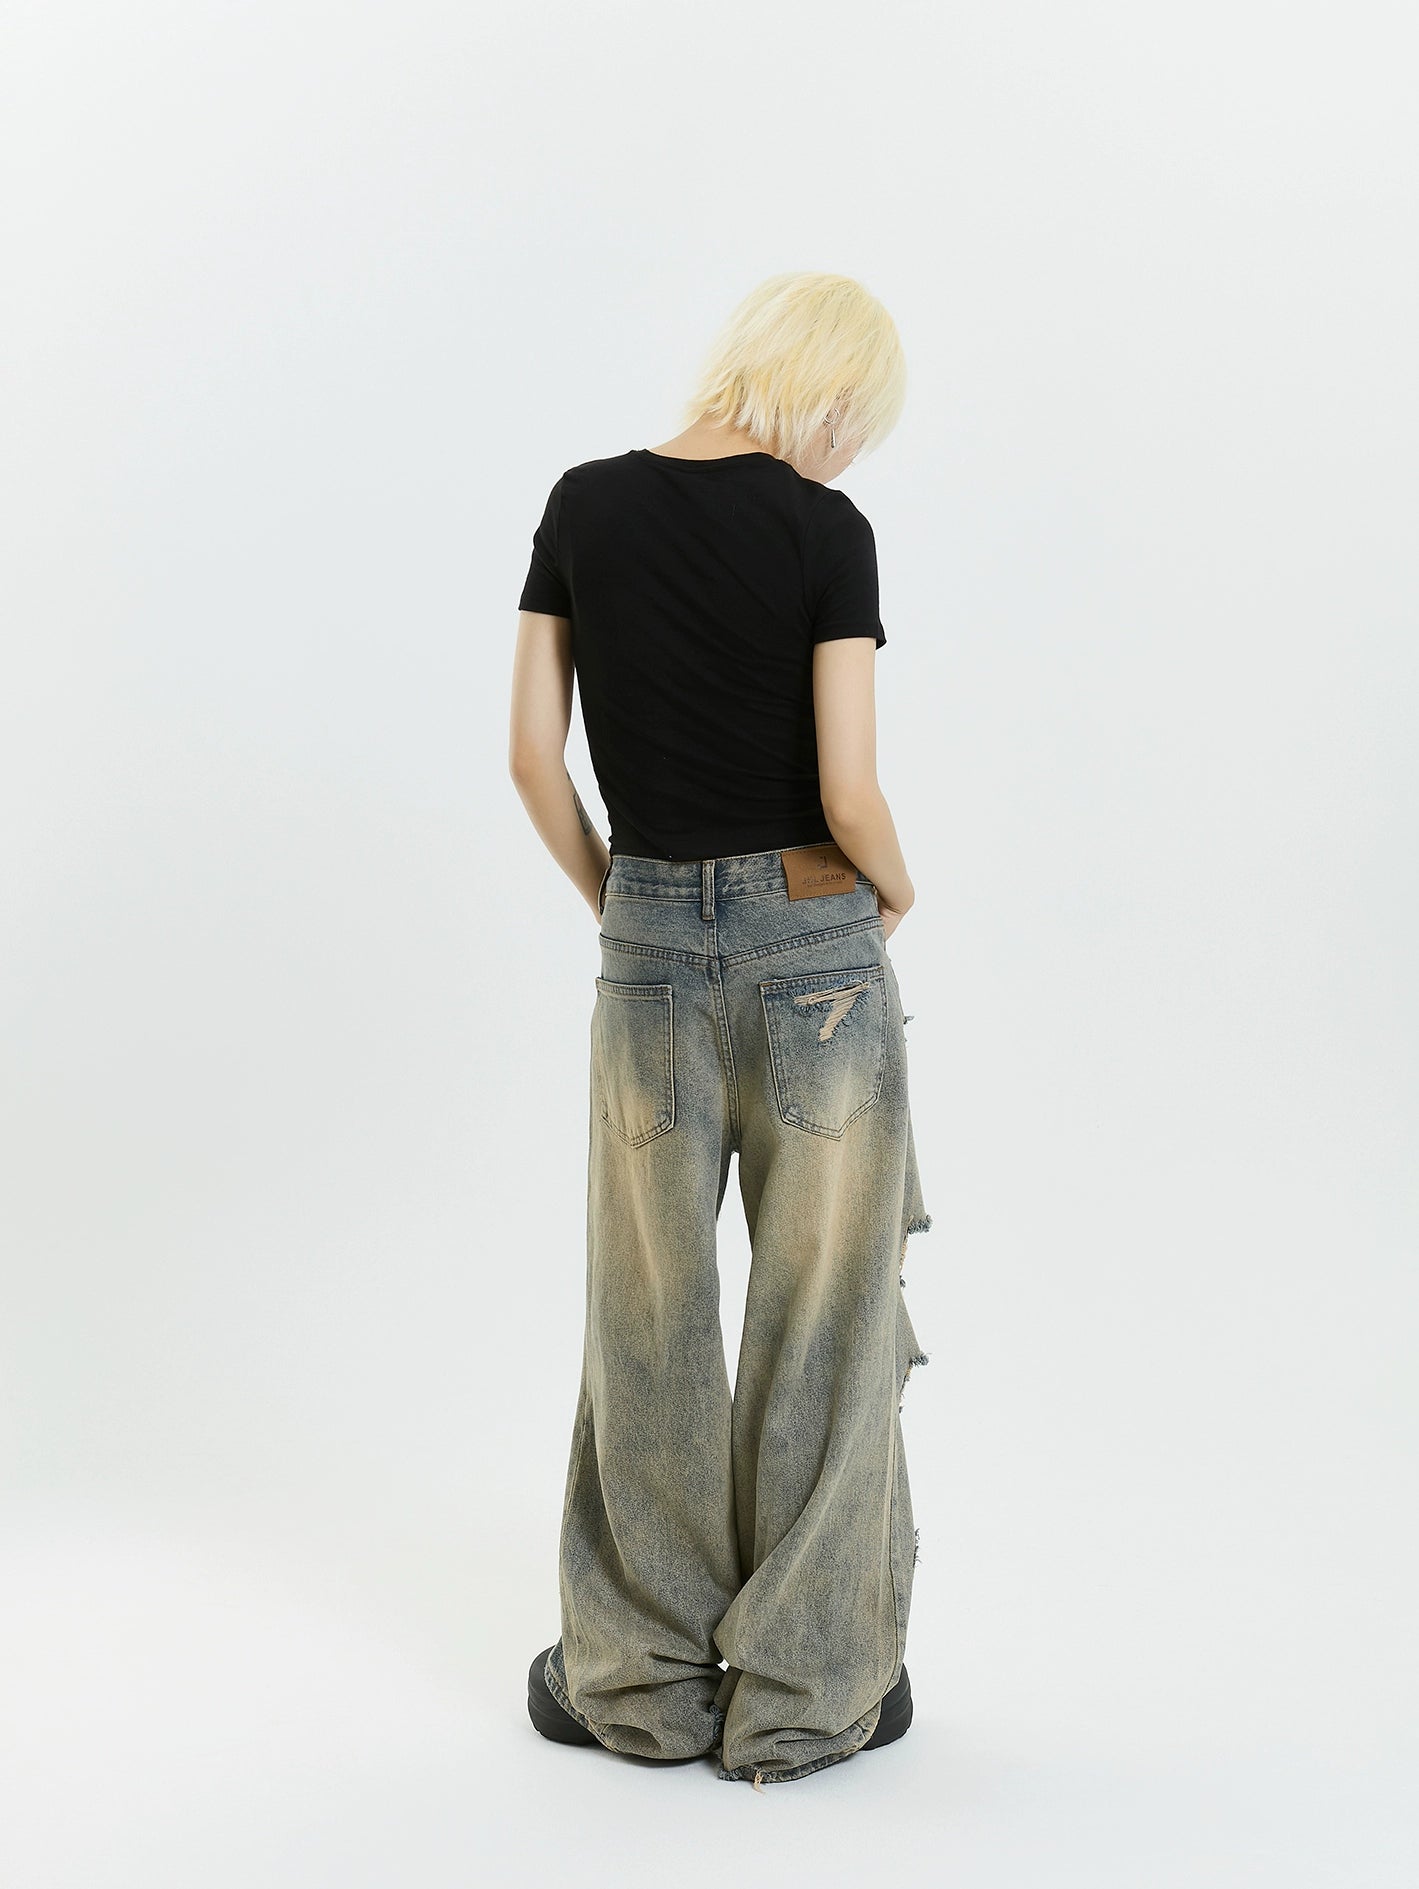 MICHINNYON vintage distressed irregular raw-edged jeans wasteland high street ripped loose wash trousers